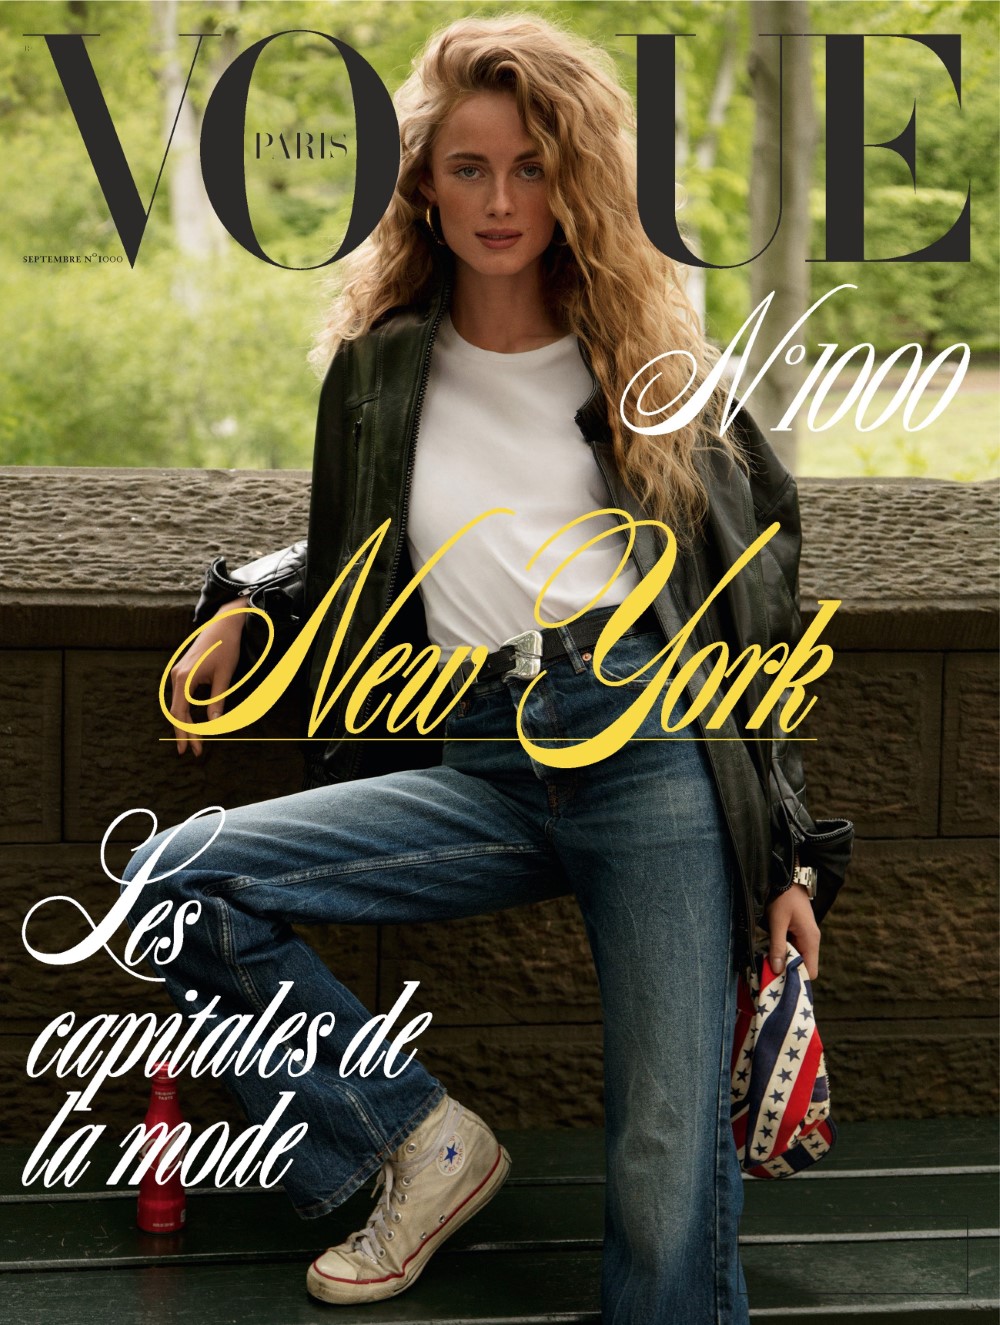 Rianne van Rompaey on four covers of Vogue Paris September 2019